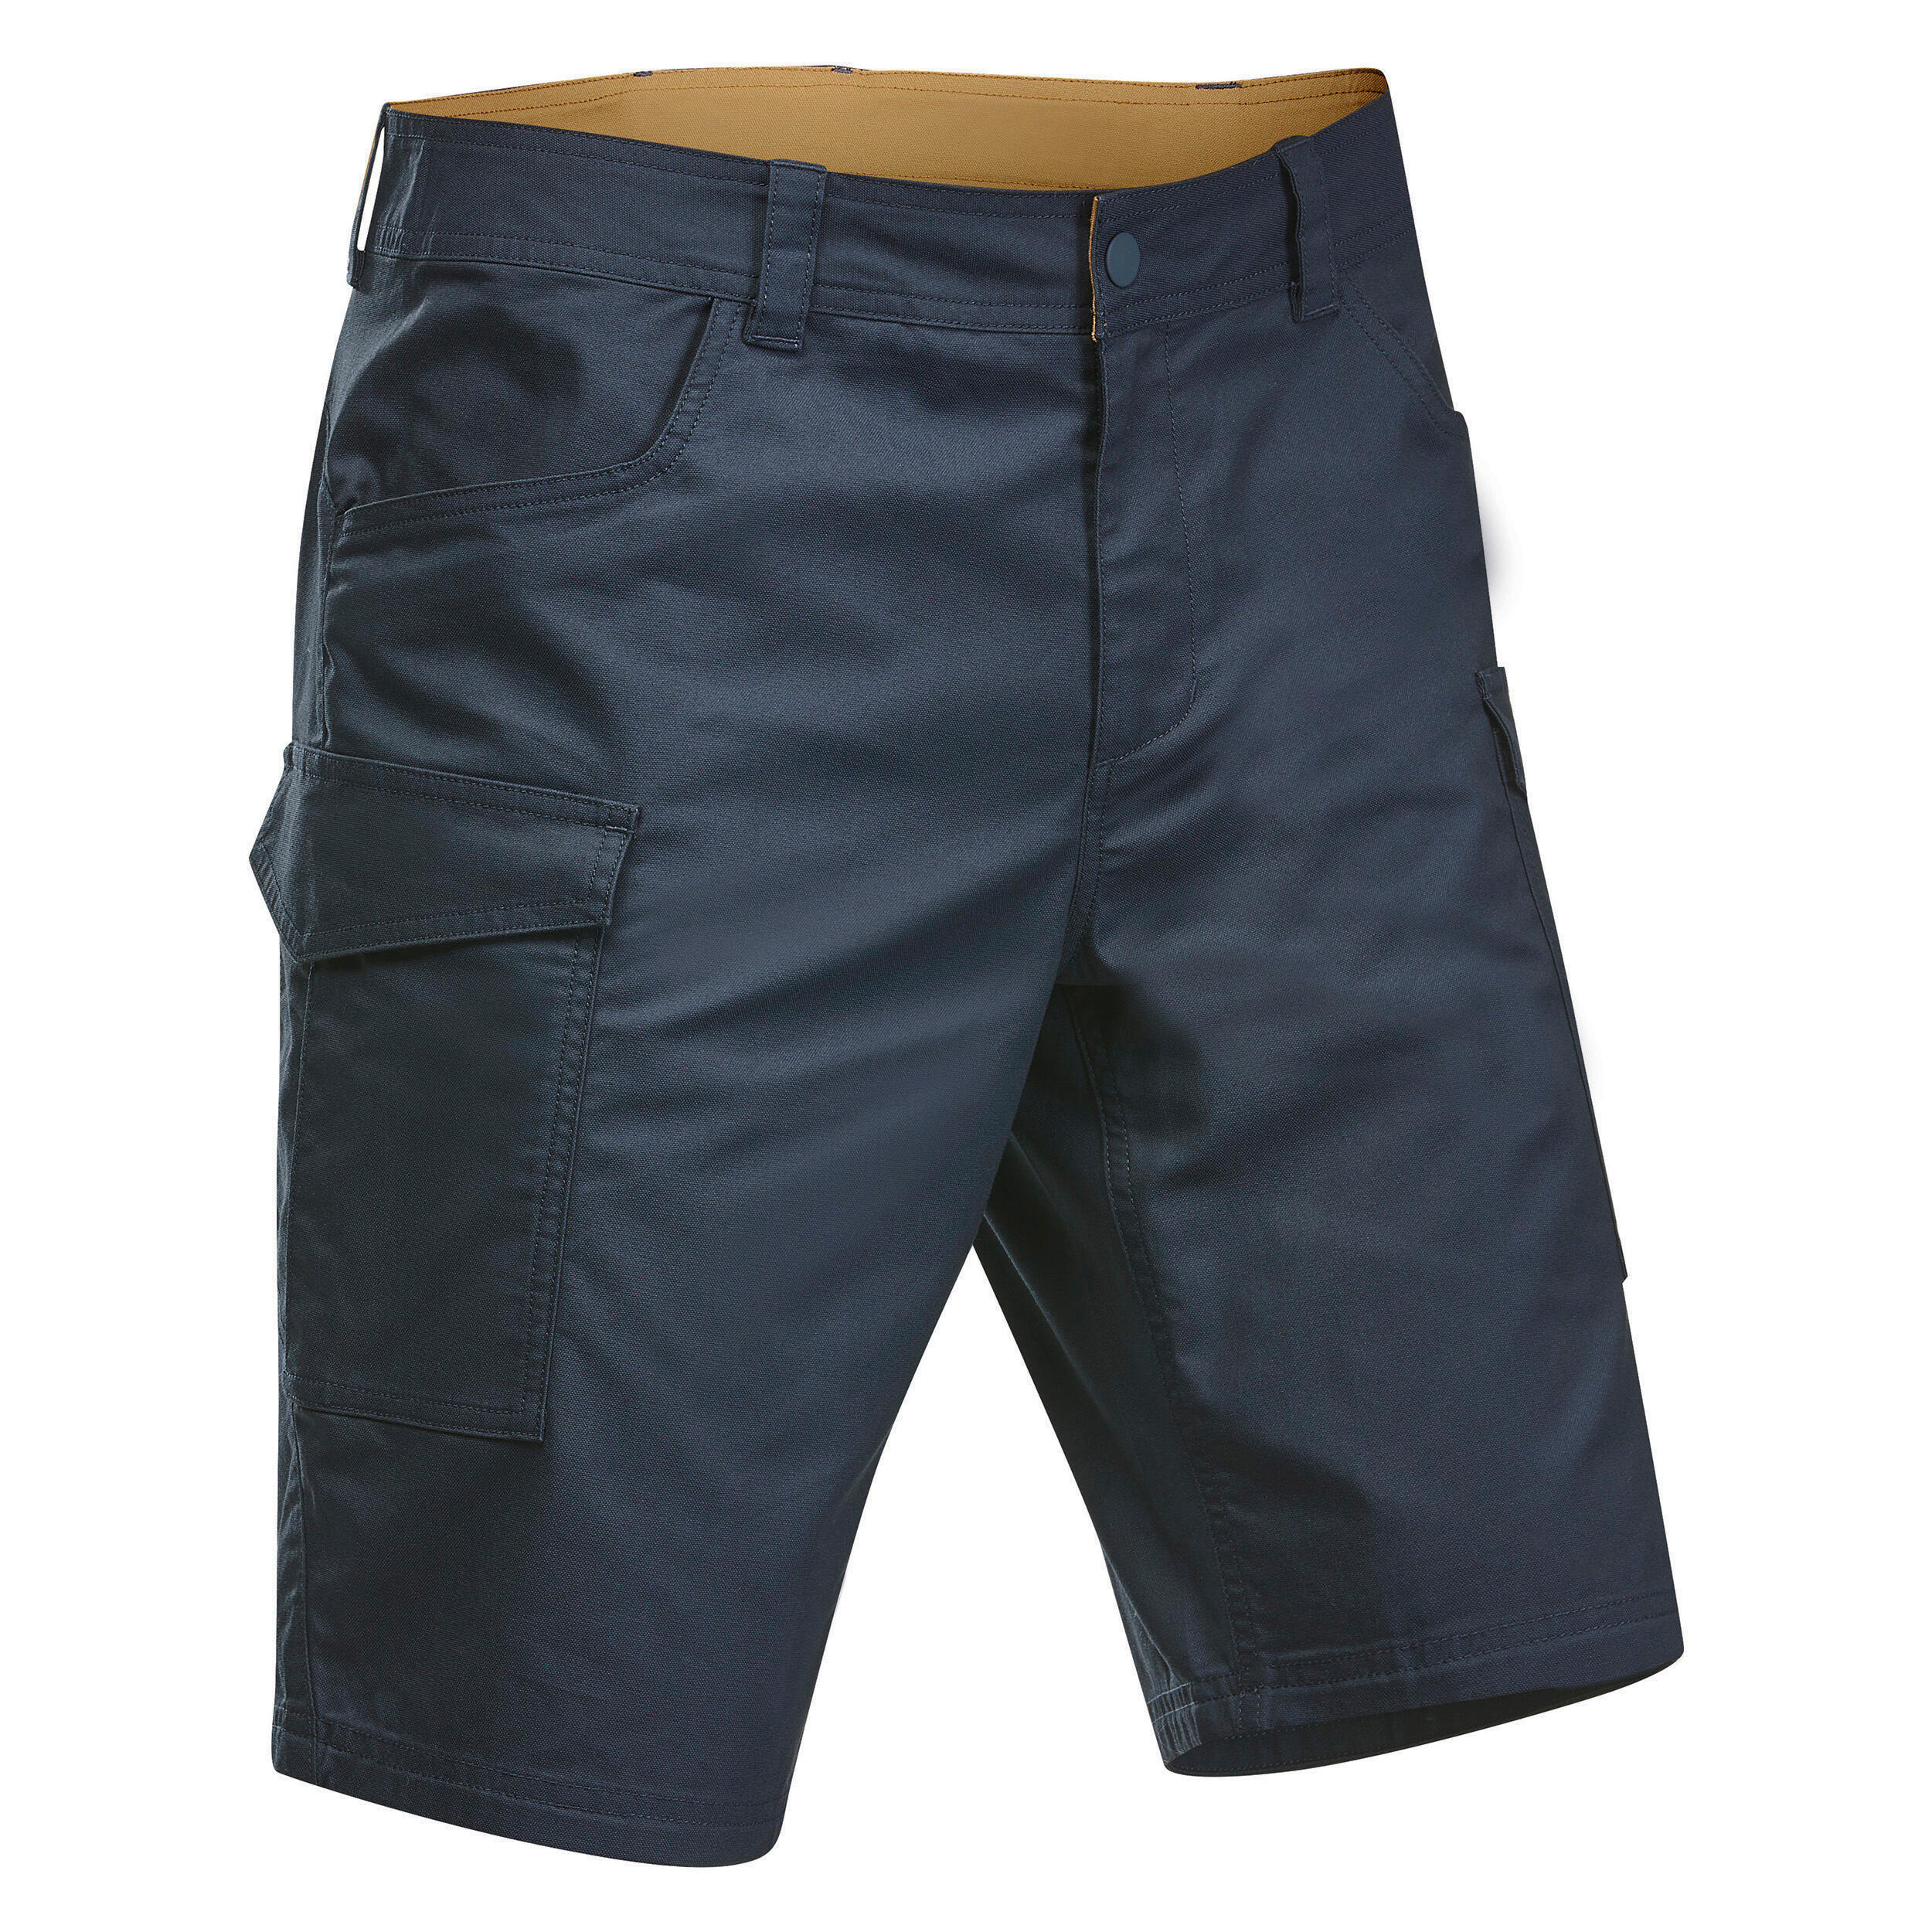 Men's Hiking Shorts - NH550